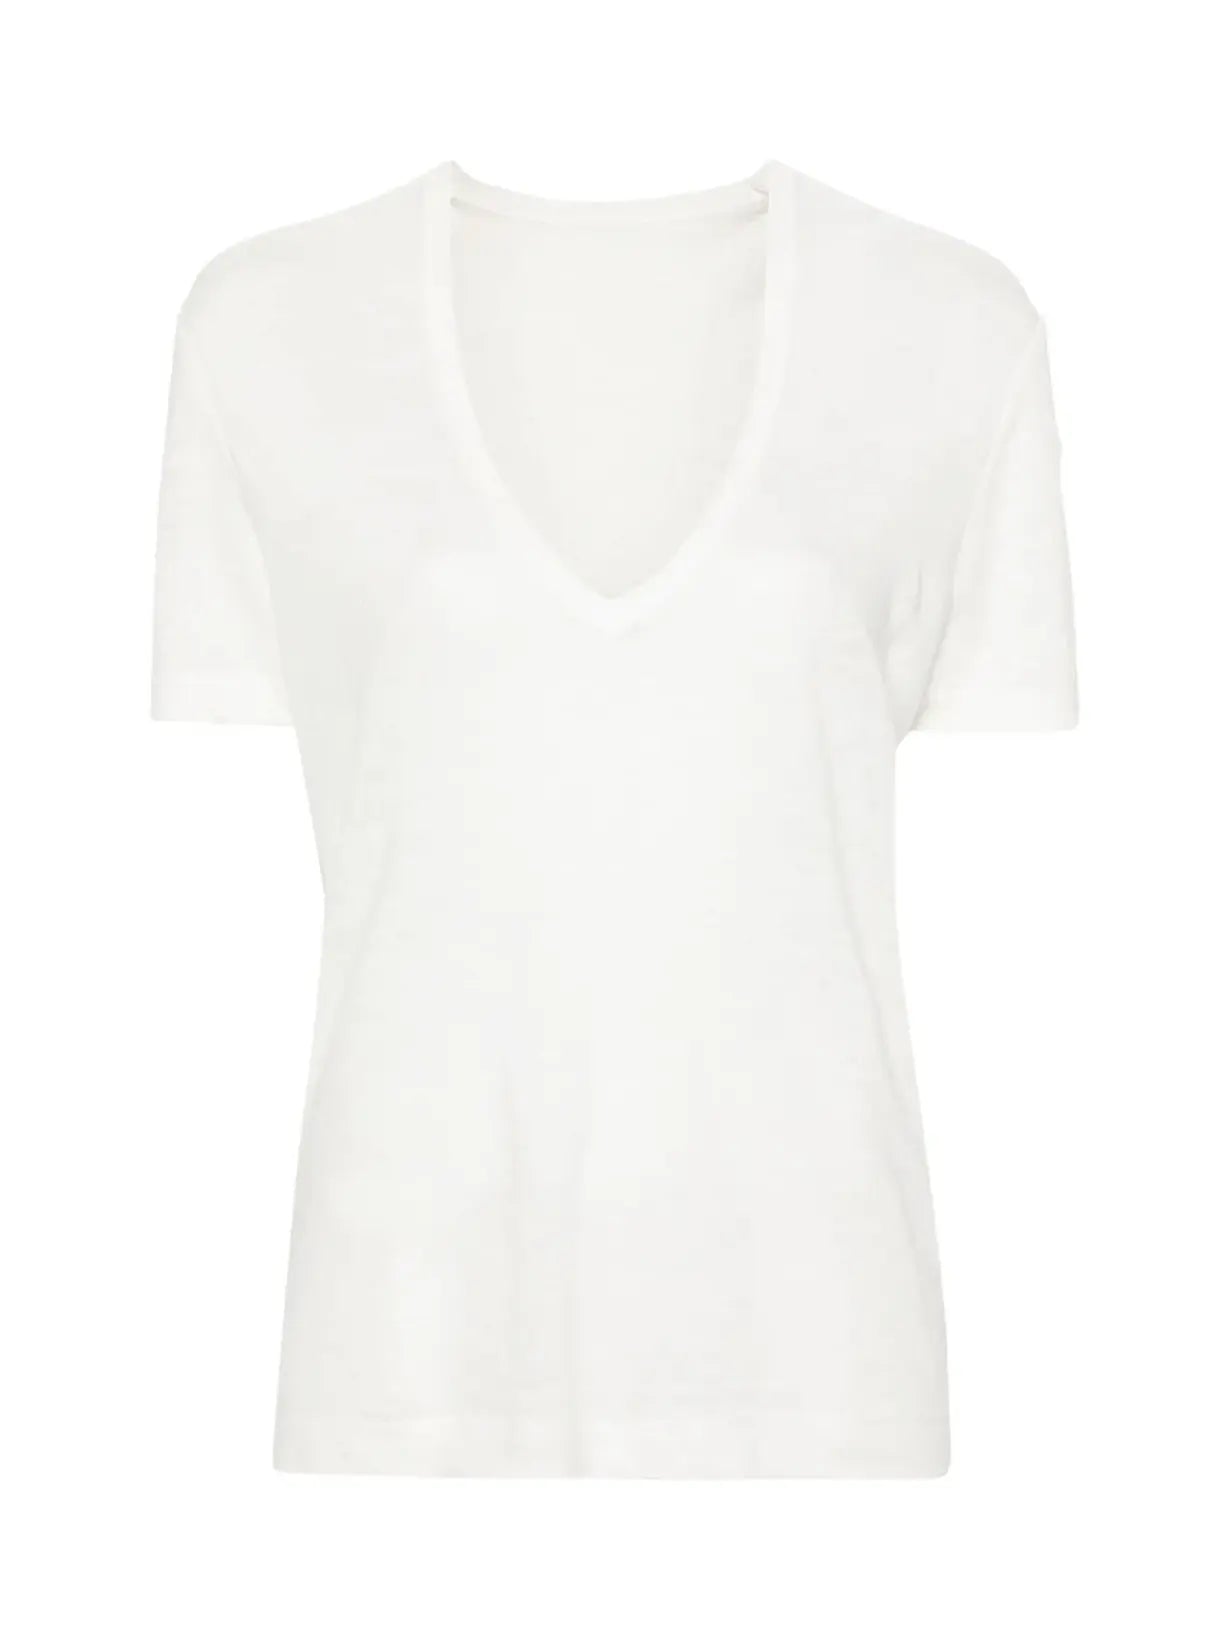 WASSA LIN t-shirt, white